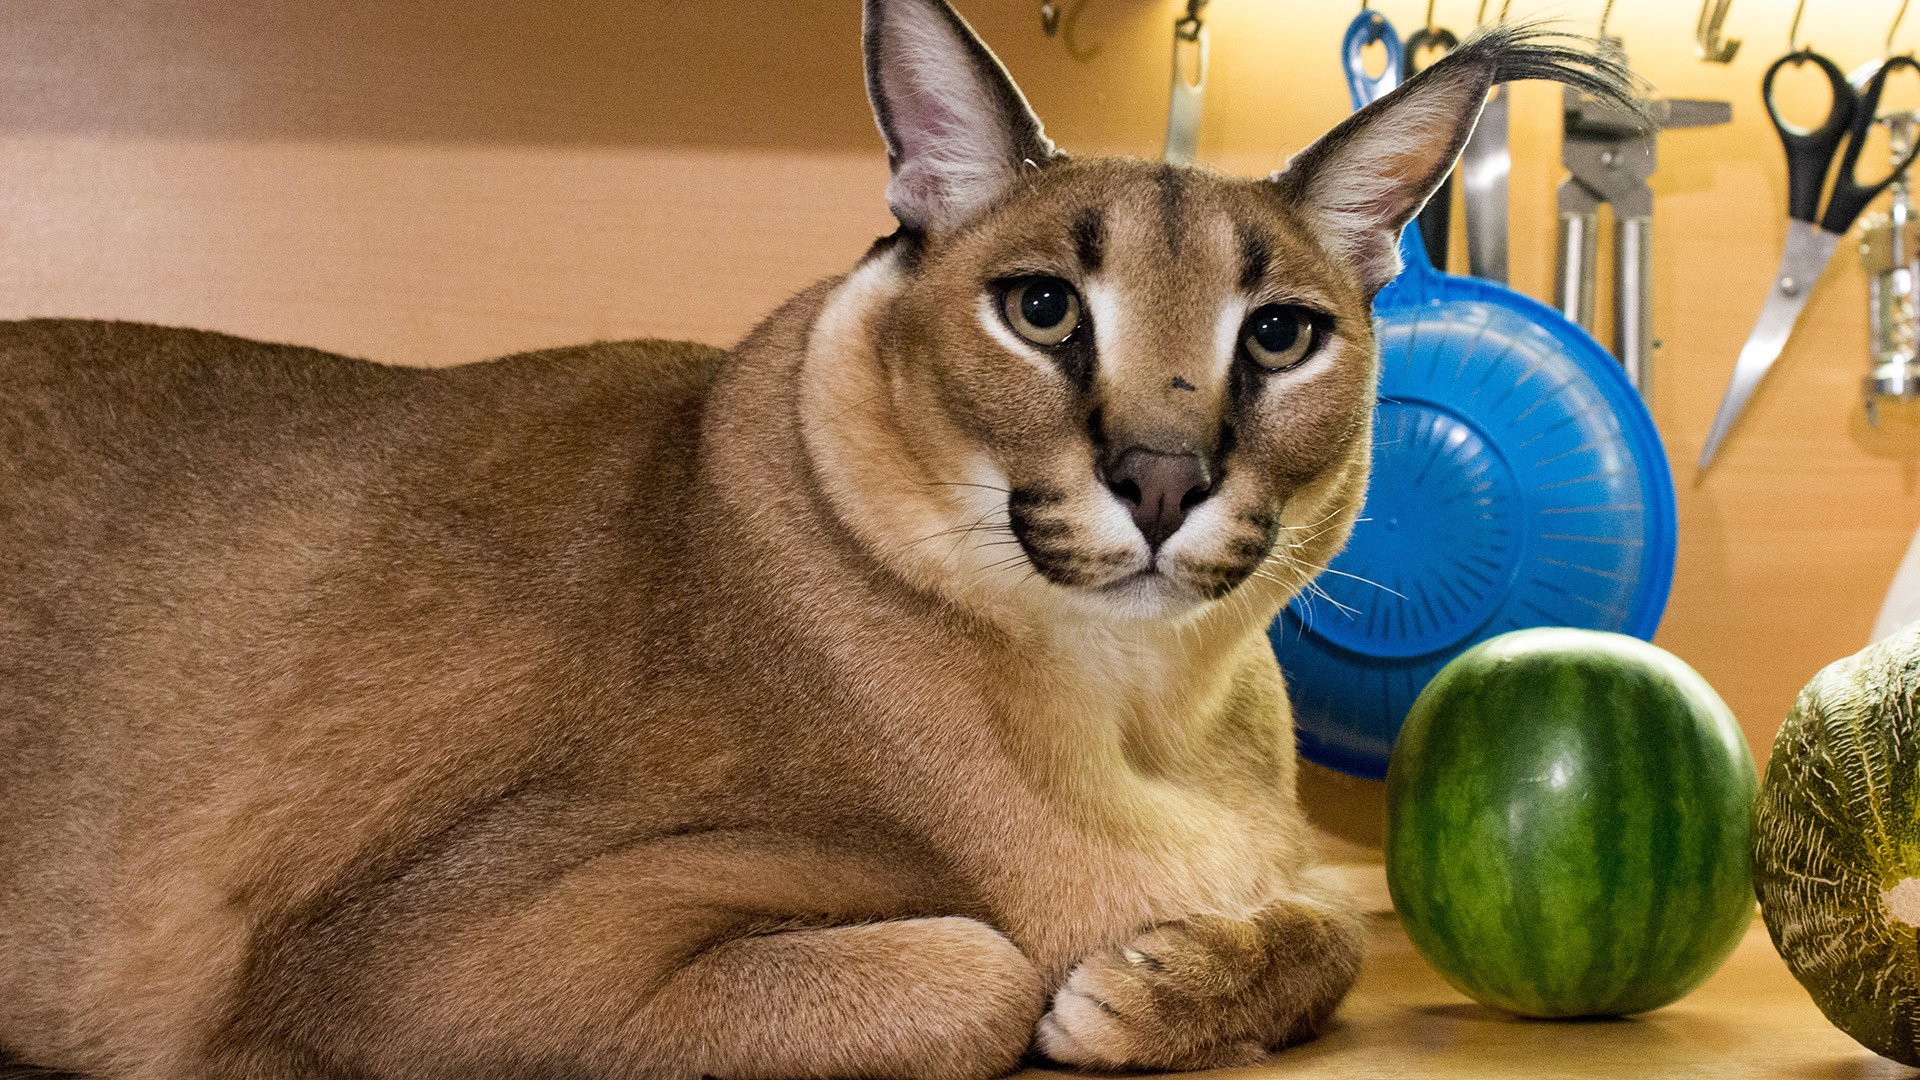 Meet 'Big Floppa' hero of the most popular cat meme of 2020 (PHOTOS)